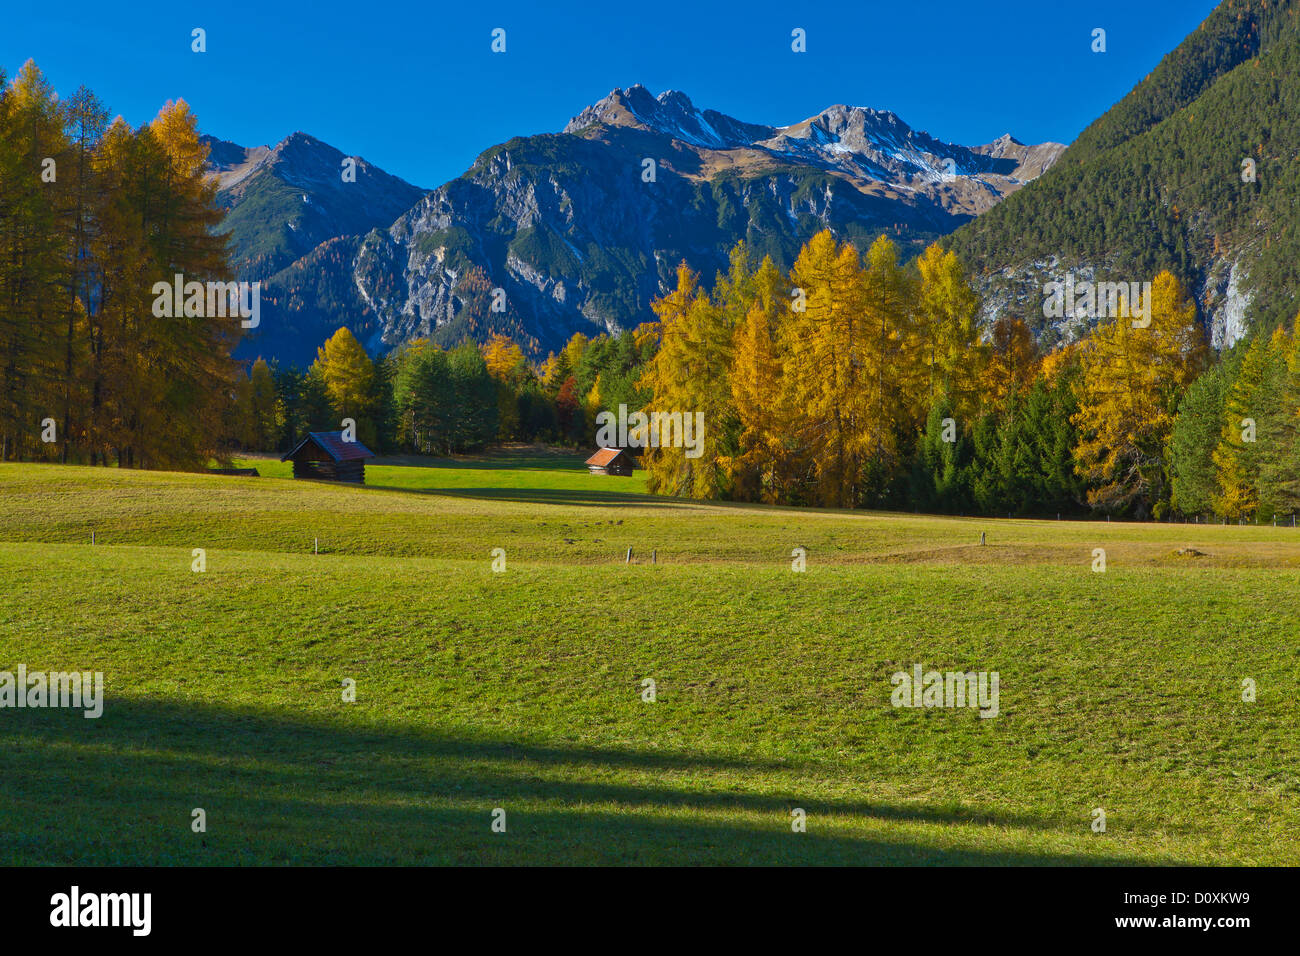 Austria, Europe, Tyrol, Tirol, Mieming, chain, plateau, Obsteig, larch meadows, Stadel, meadow, trees, mountains, Lechtal Alps, Stock Photo